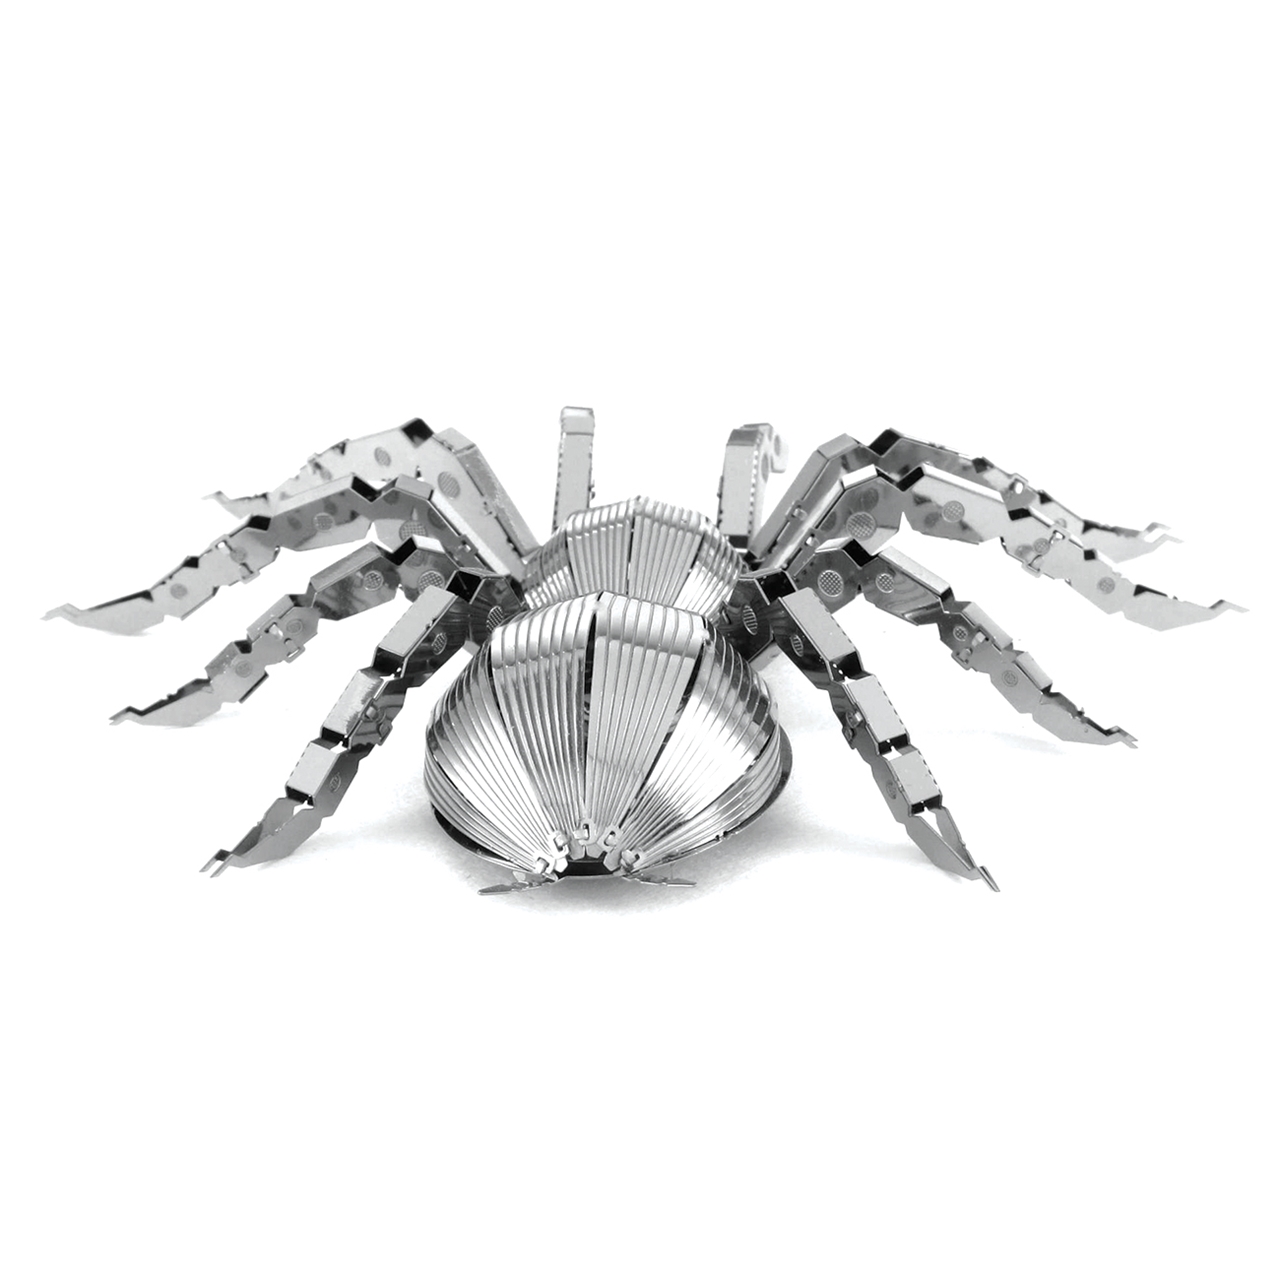 Tarantula Metal Earth 3D Laser Cut Metal Model Fascinations Insect Spider 